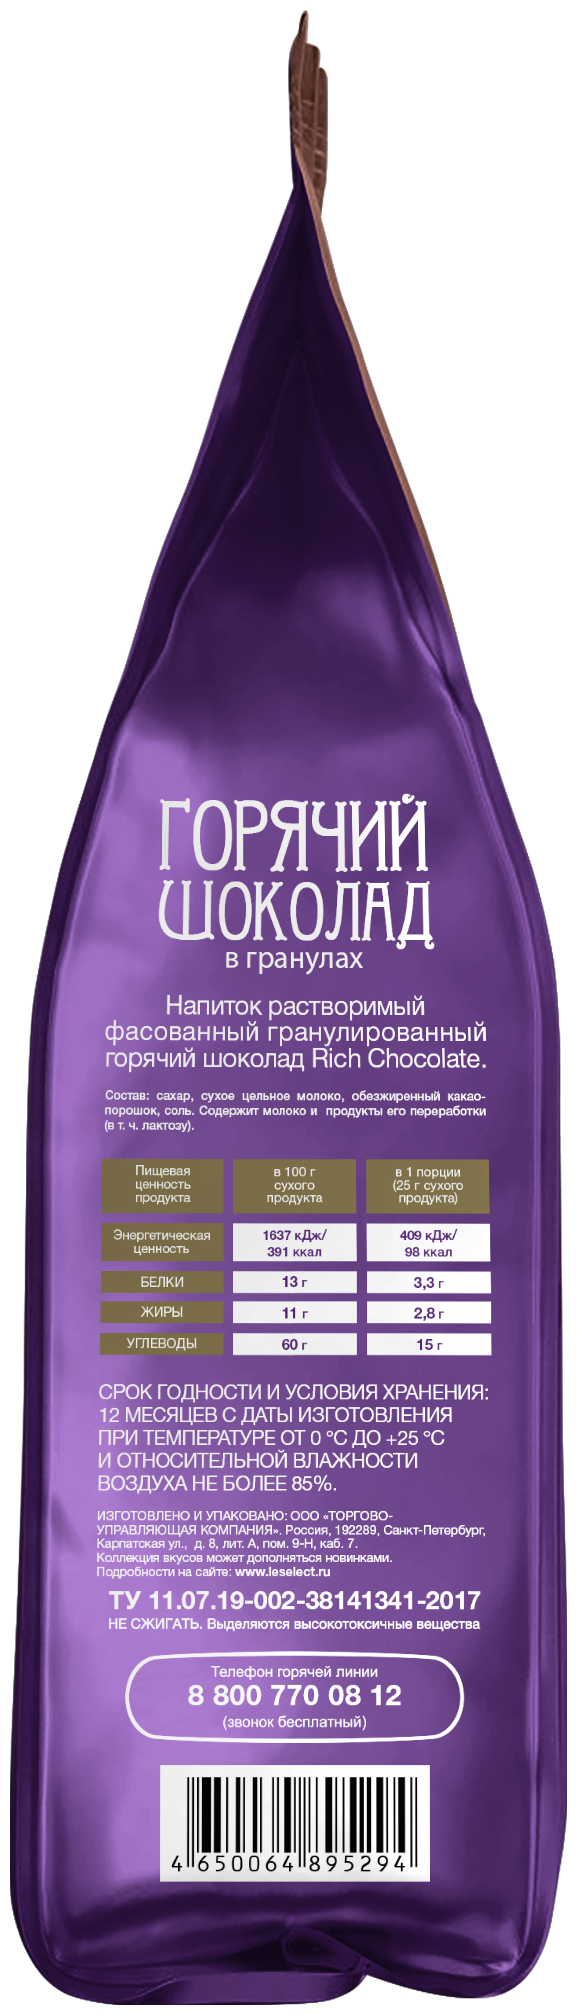 Горячий шоколаж Le Select Rich chocolate растворимый 200г - фото №8